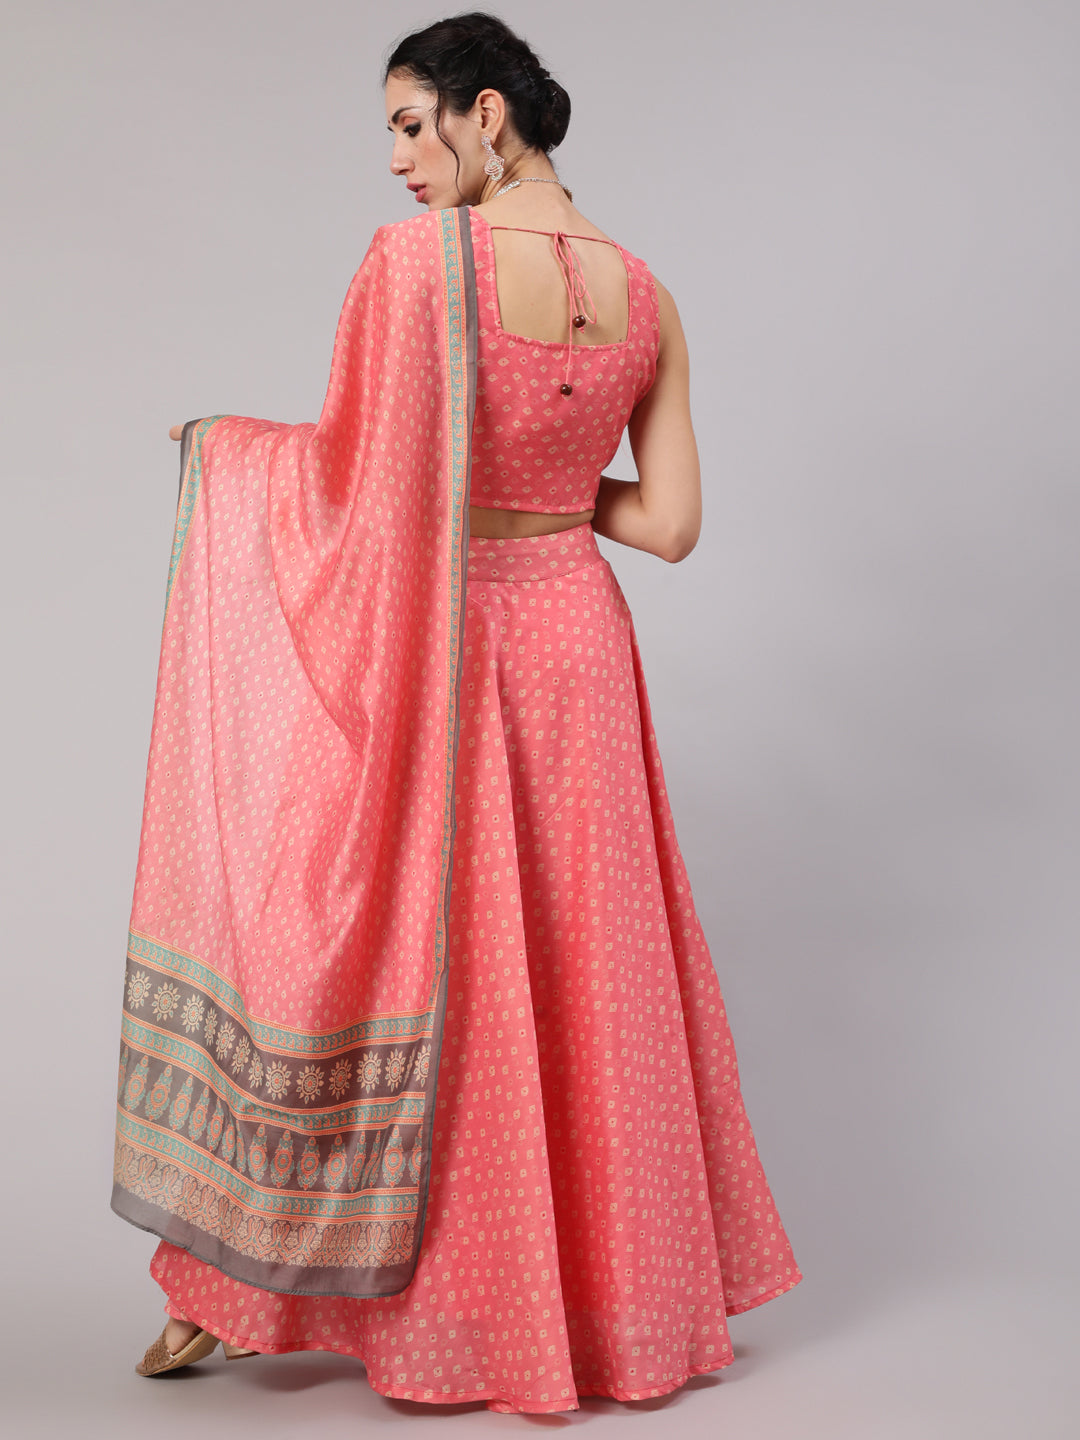 Women's Pink Bandhani Print Lehenga Choli With Dupatta Set - Aks